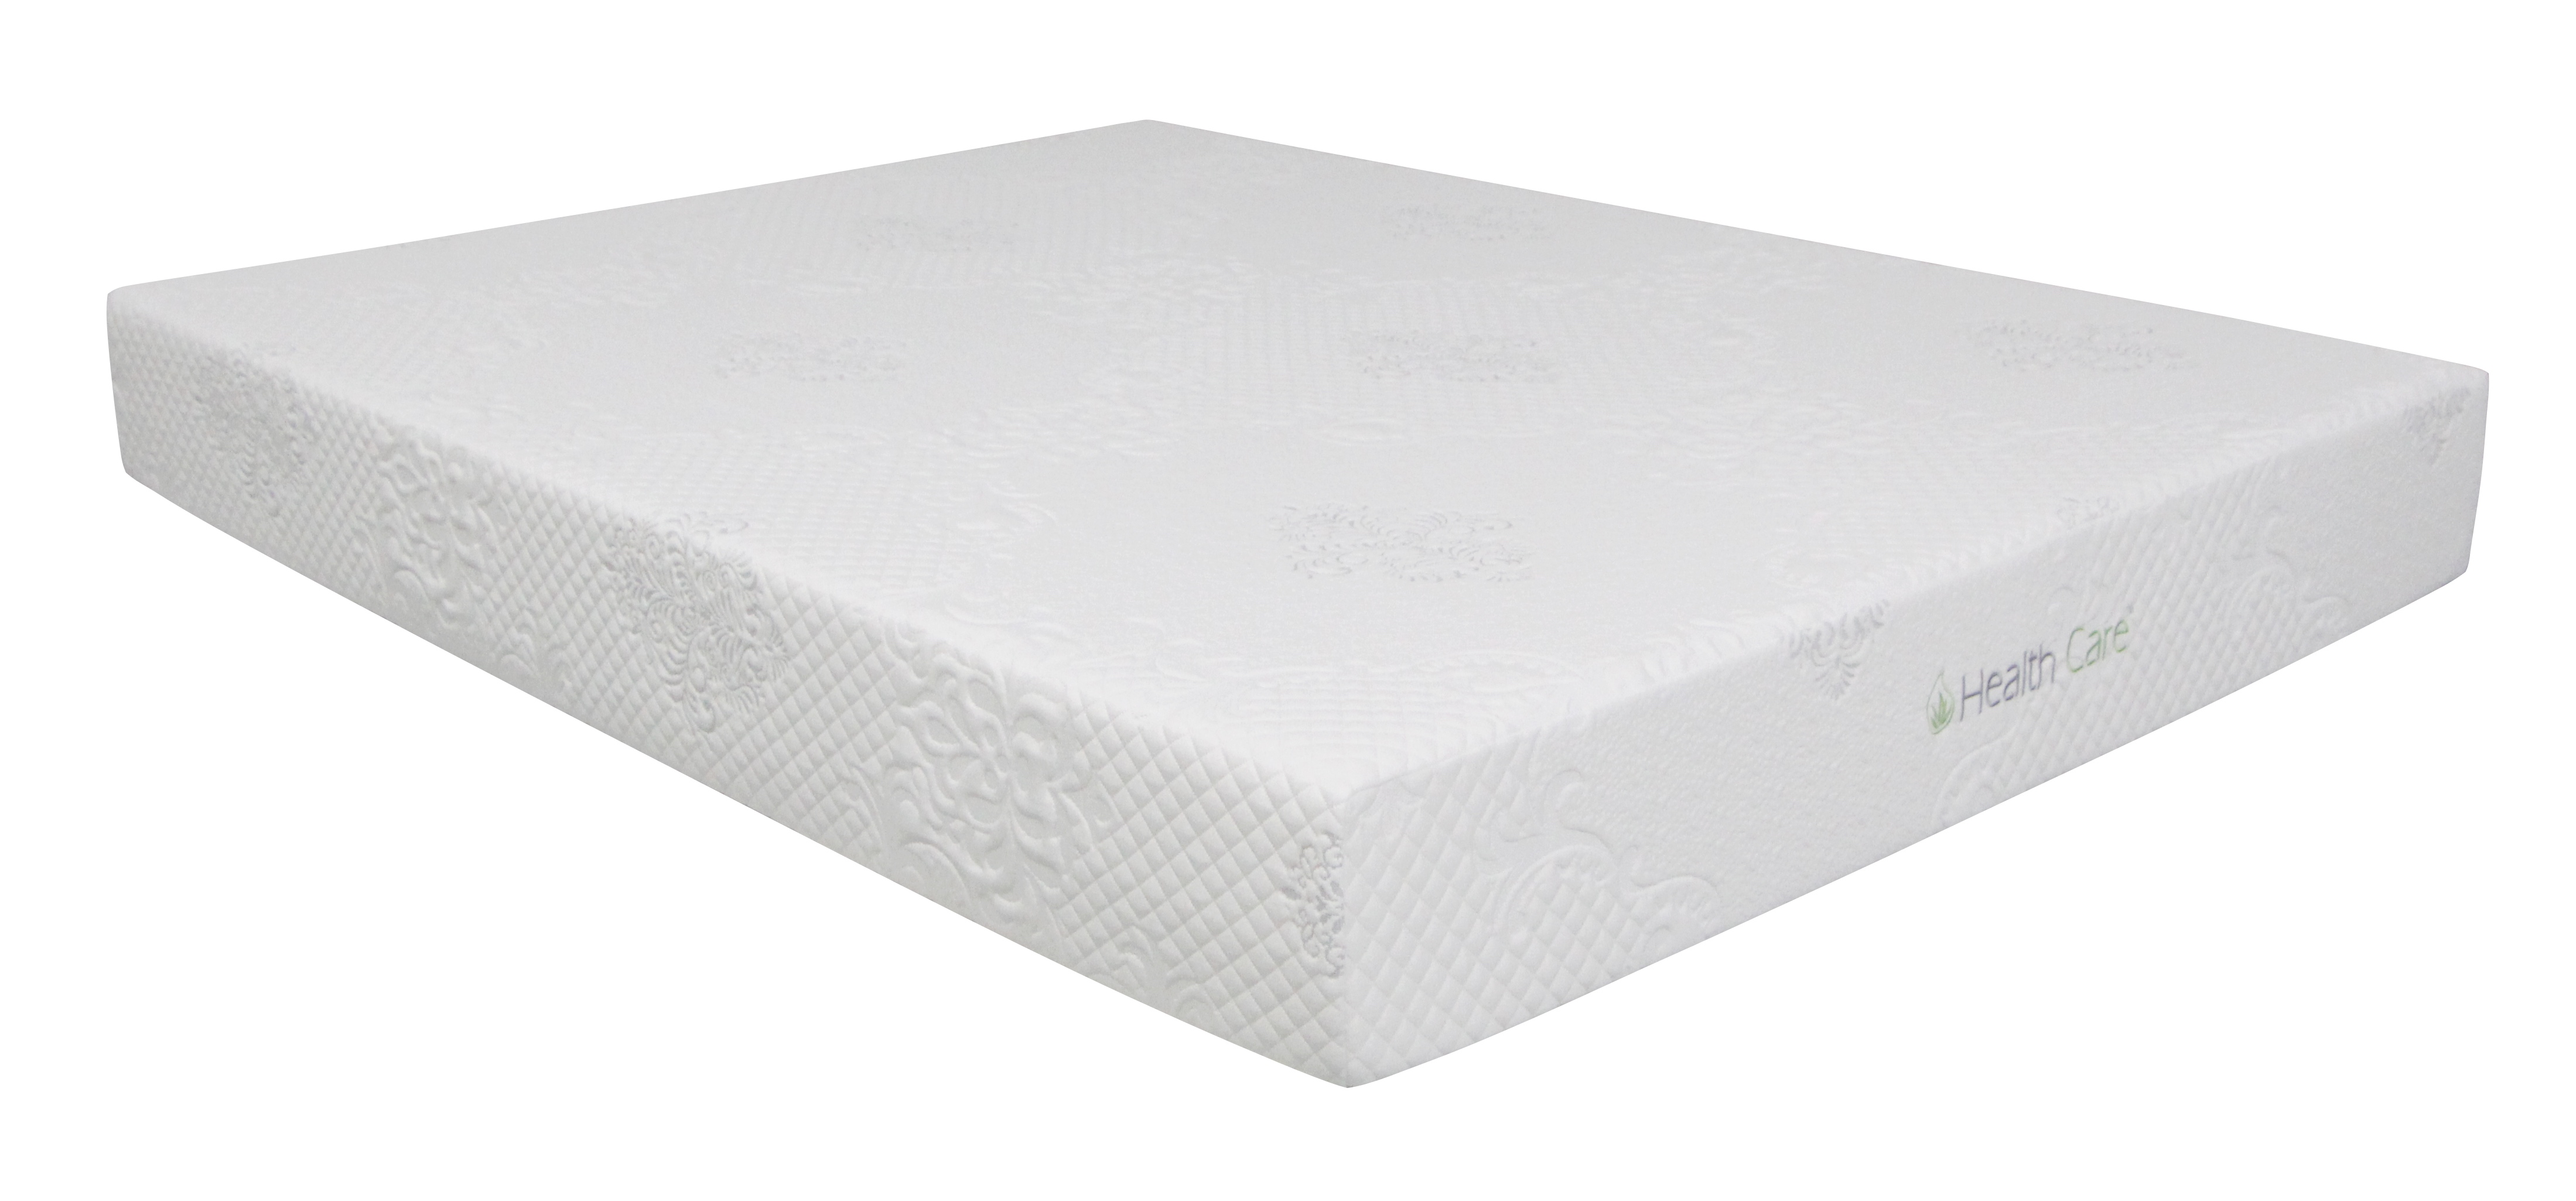 healthcare memory foam mattress king